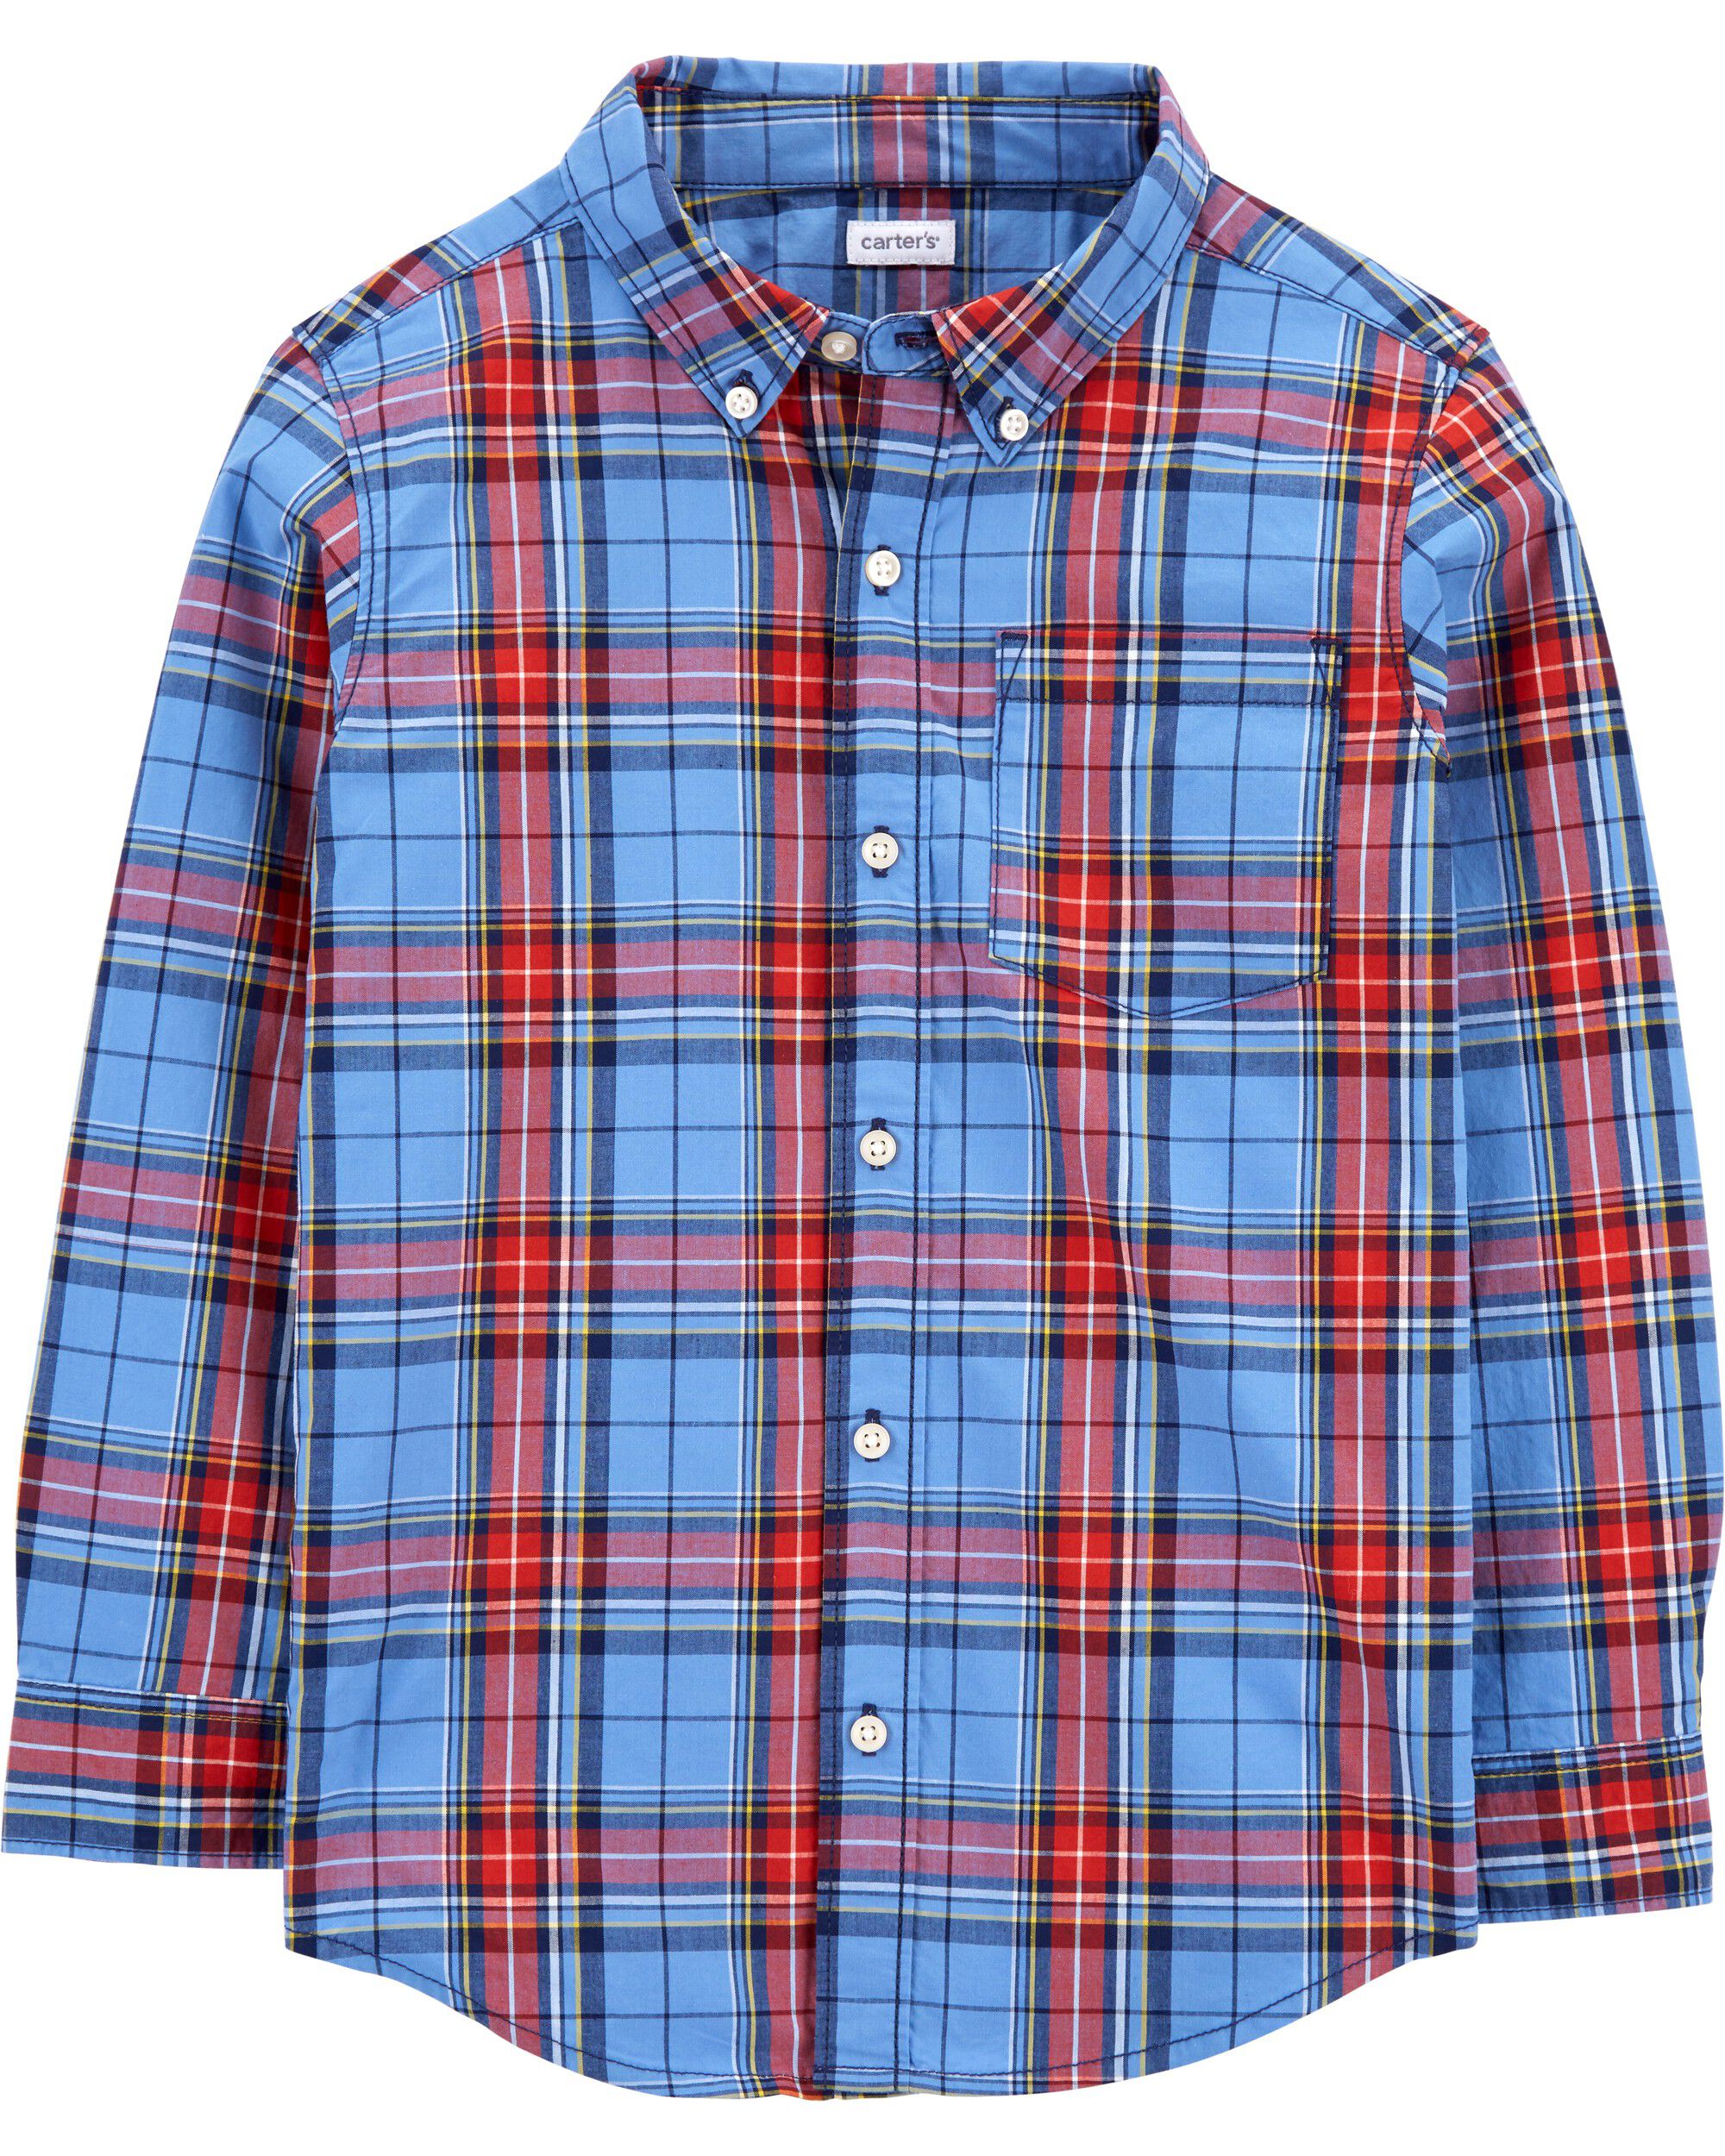 New Carter's Plaid Flannel Boys Button up Shirt Top Blue 